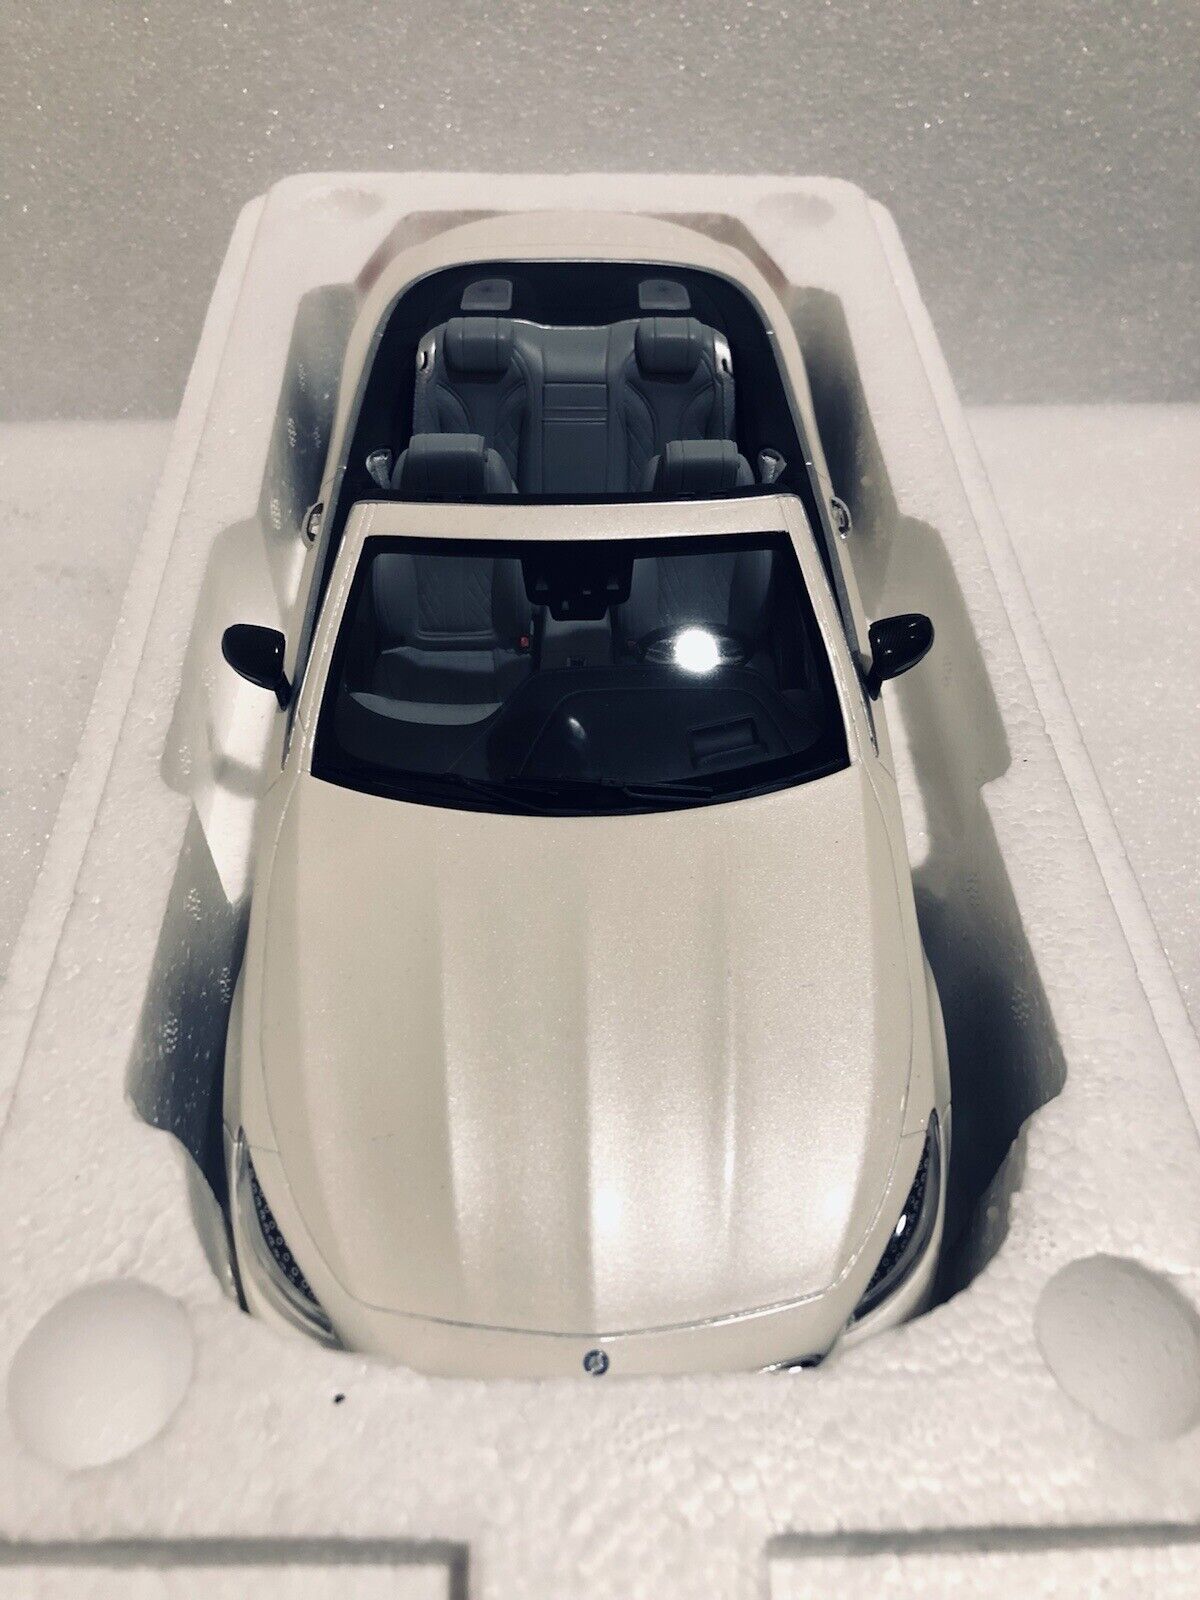 GT Spirit Mercedes Benz S63 AMG Convertible Designo Diamond White (Dealer Edition) 1:18 Resin, SEALED